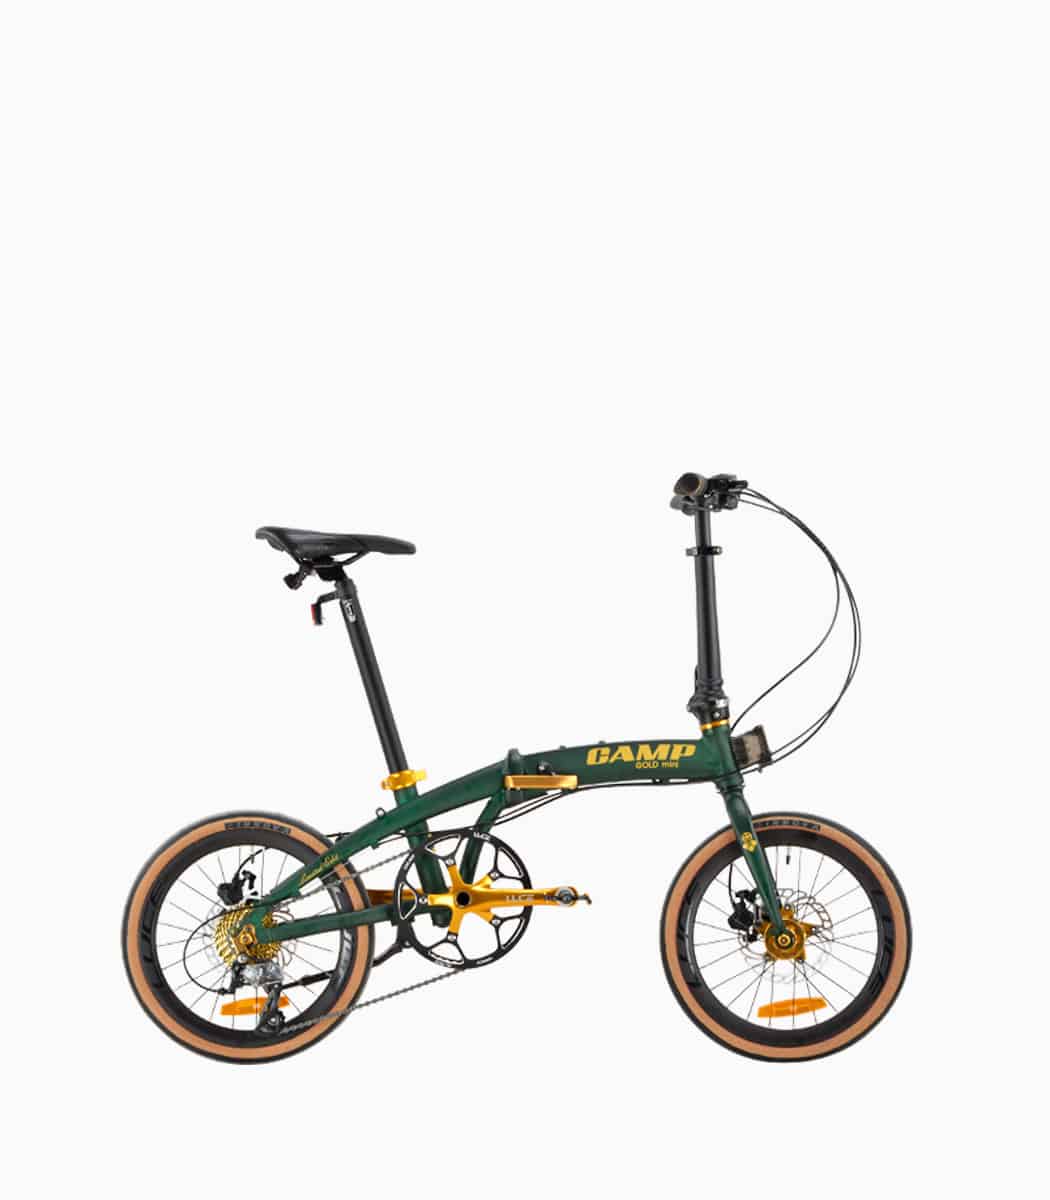 CAMP GOLD Mini (MATT GREEN) foldable bicycle right